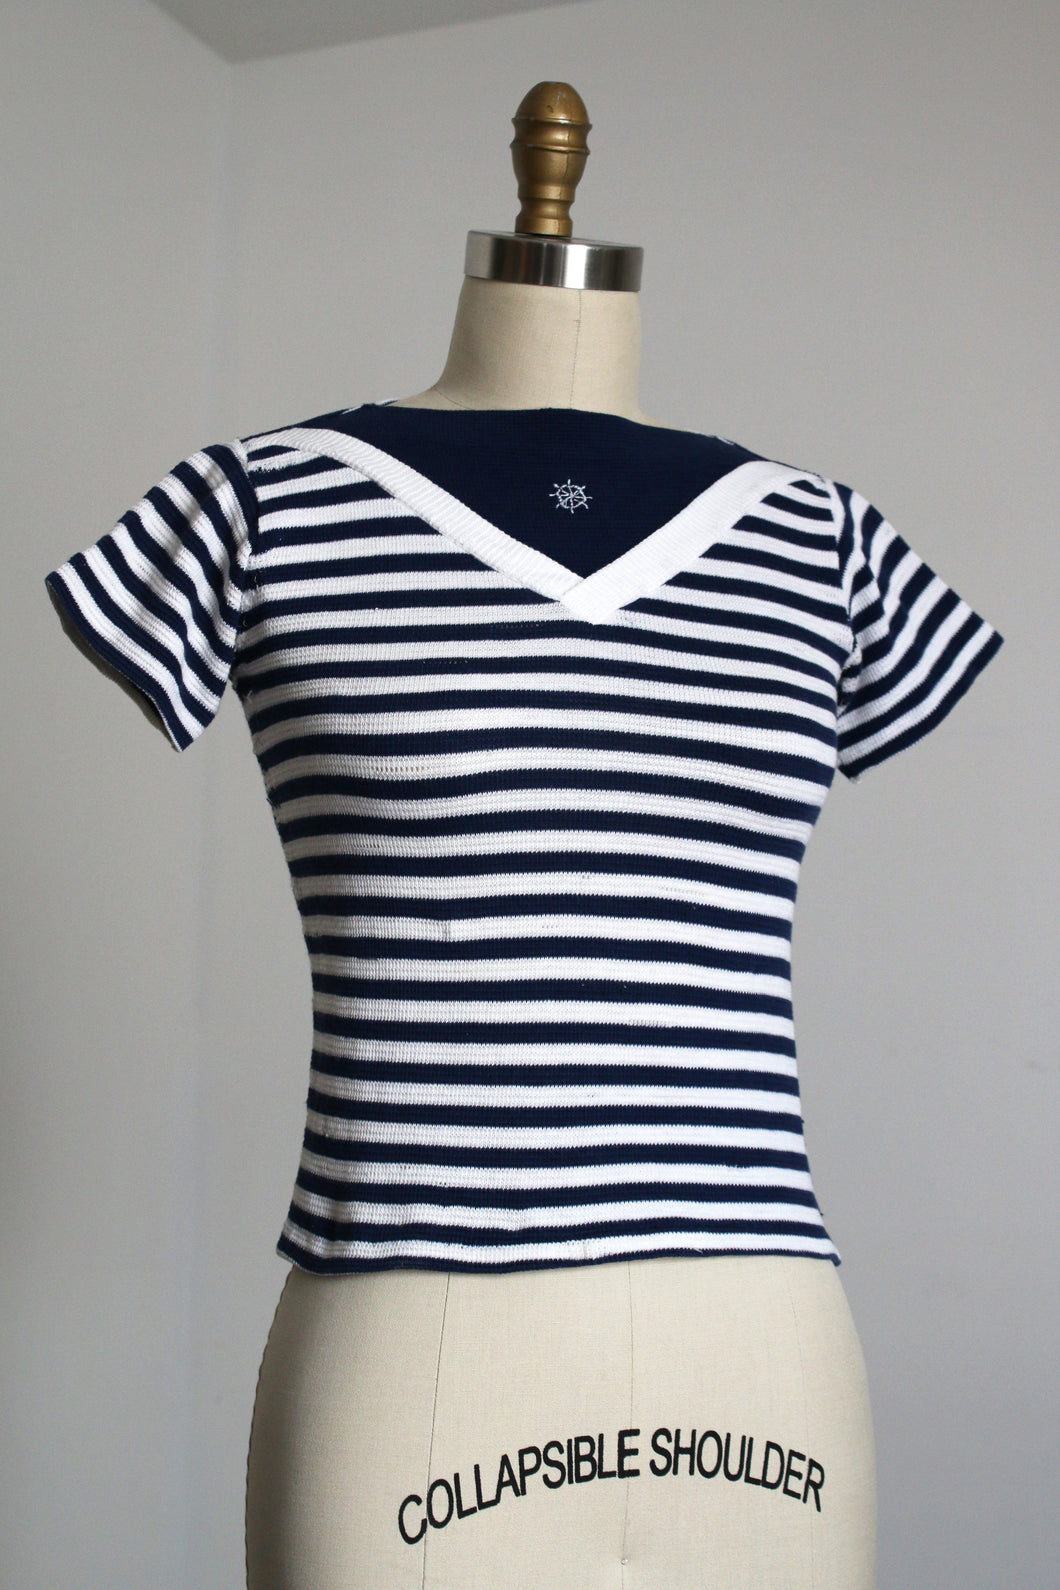 vintage 1950s nautical t-shirt {xxs}